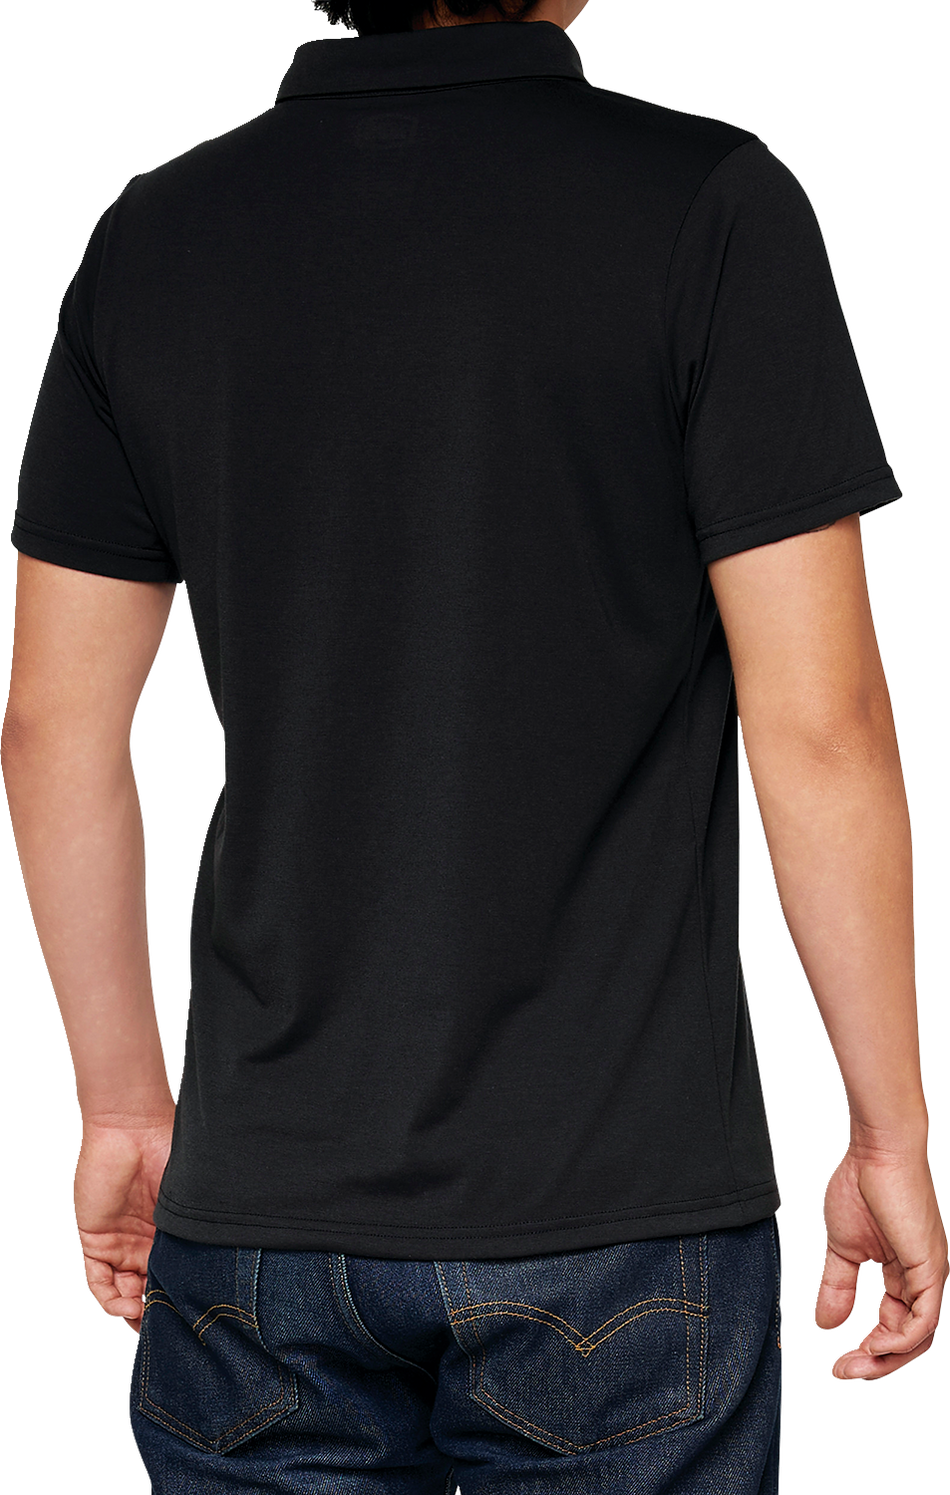 100% Corpo Polo Shirt - Black/Gray - Large 35019-057-12